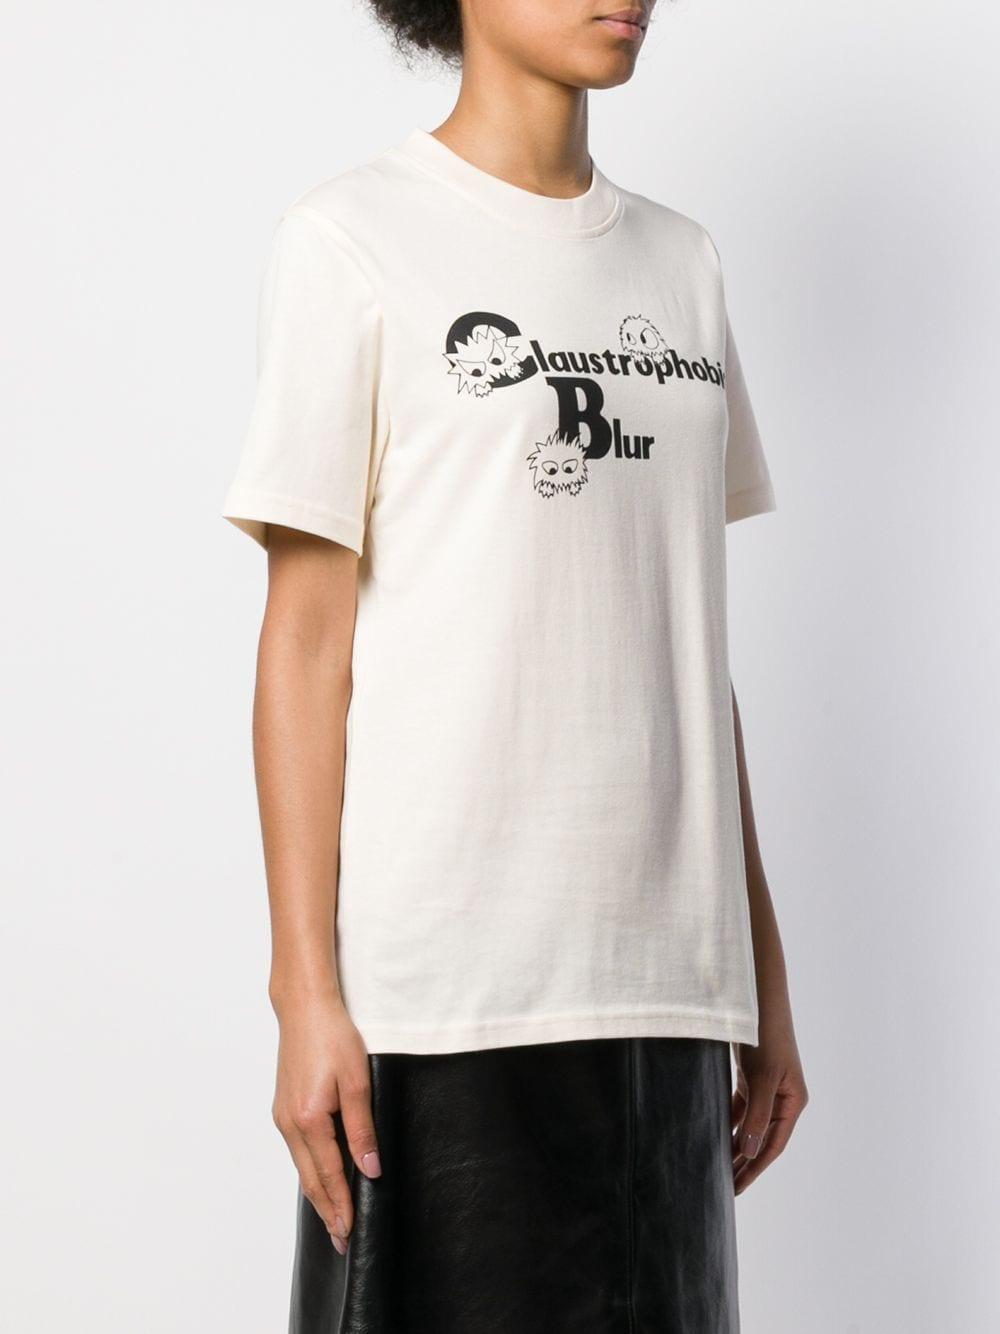 McQ Cotton Claustrophobic Blur T-shirt in White - Lyst